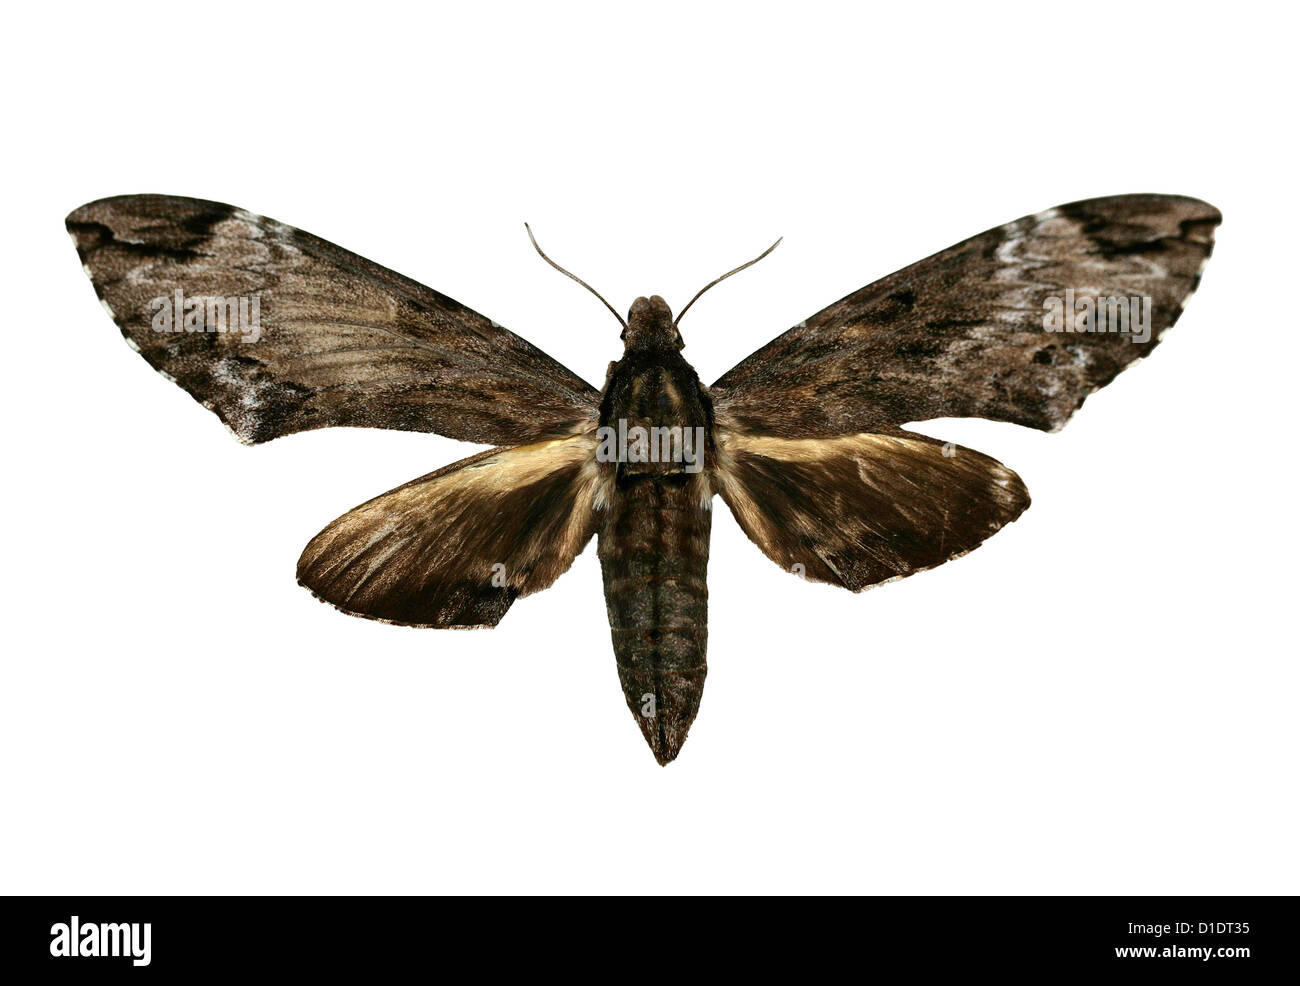 Australian Privet Hawk Moth, Psilogramma menephron, Sphingidae. Northern Australia and Papua New Guinea. Mounted Specimen Cutout Stock Photo